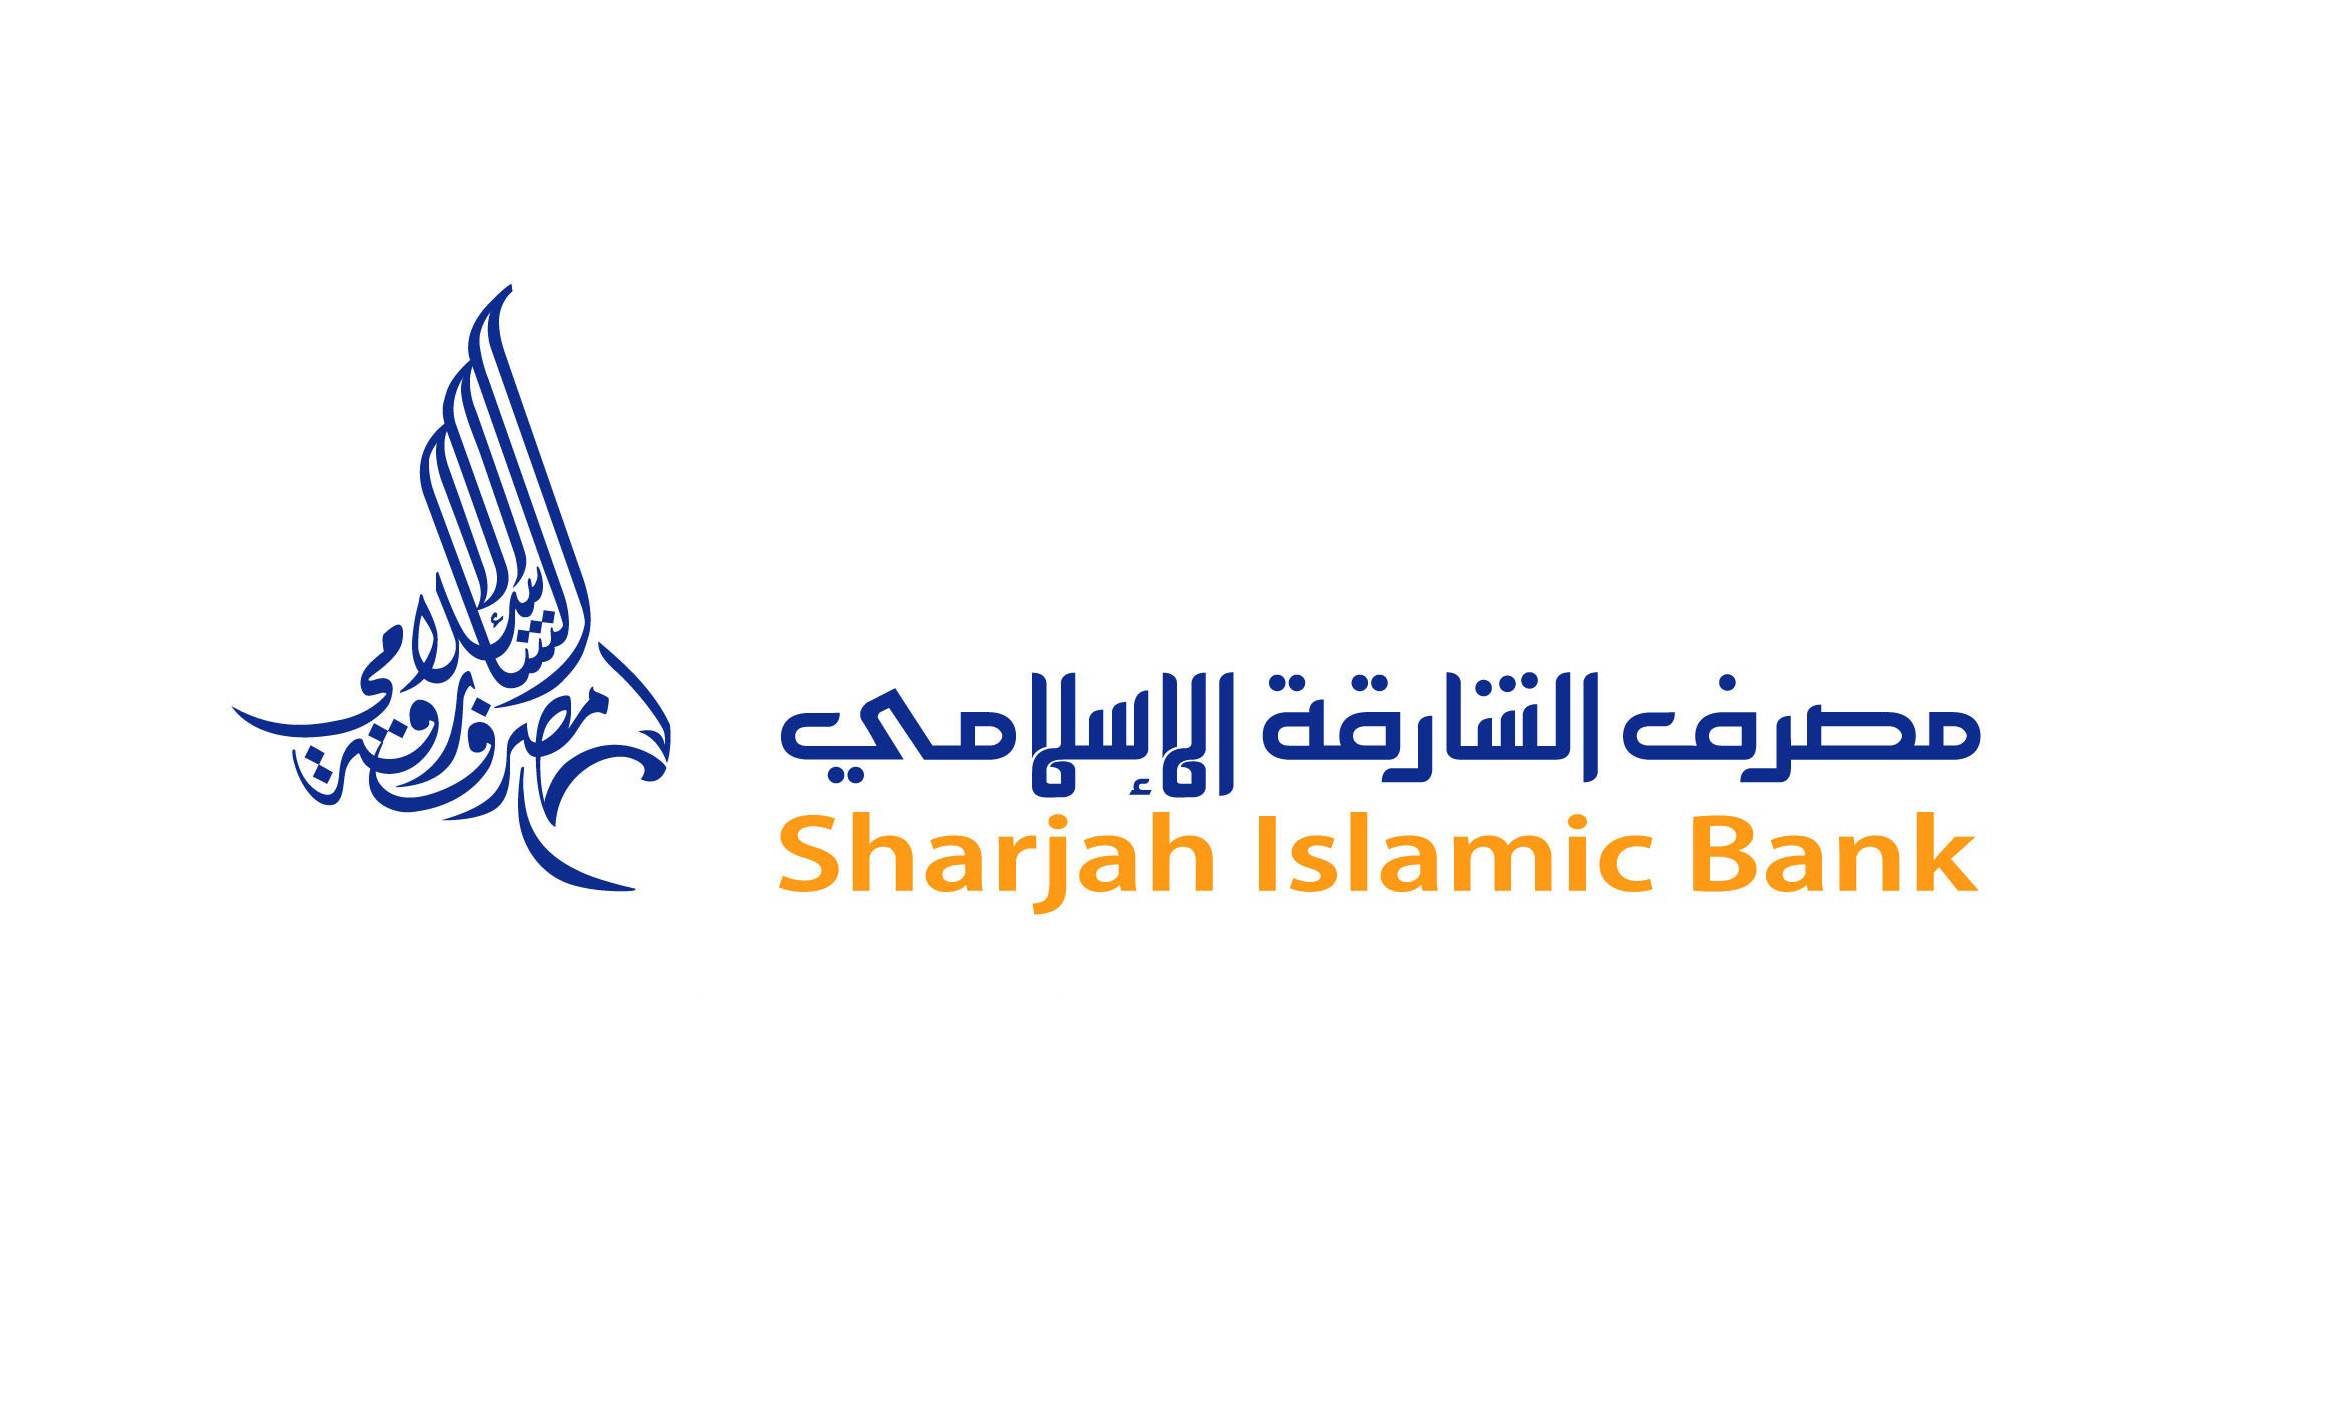 Sharjah Islamic Bank (SIB)